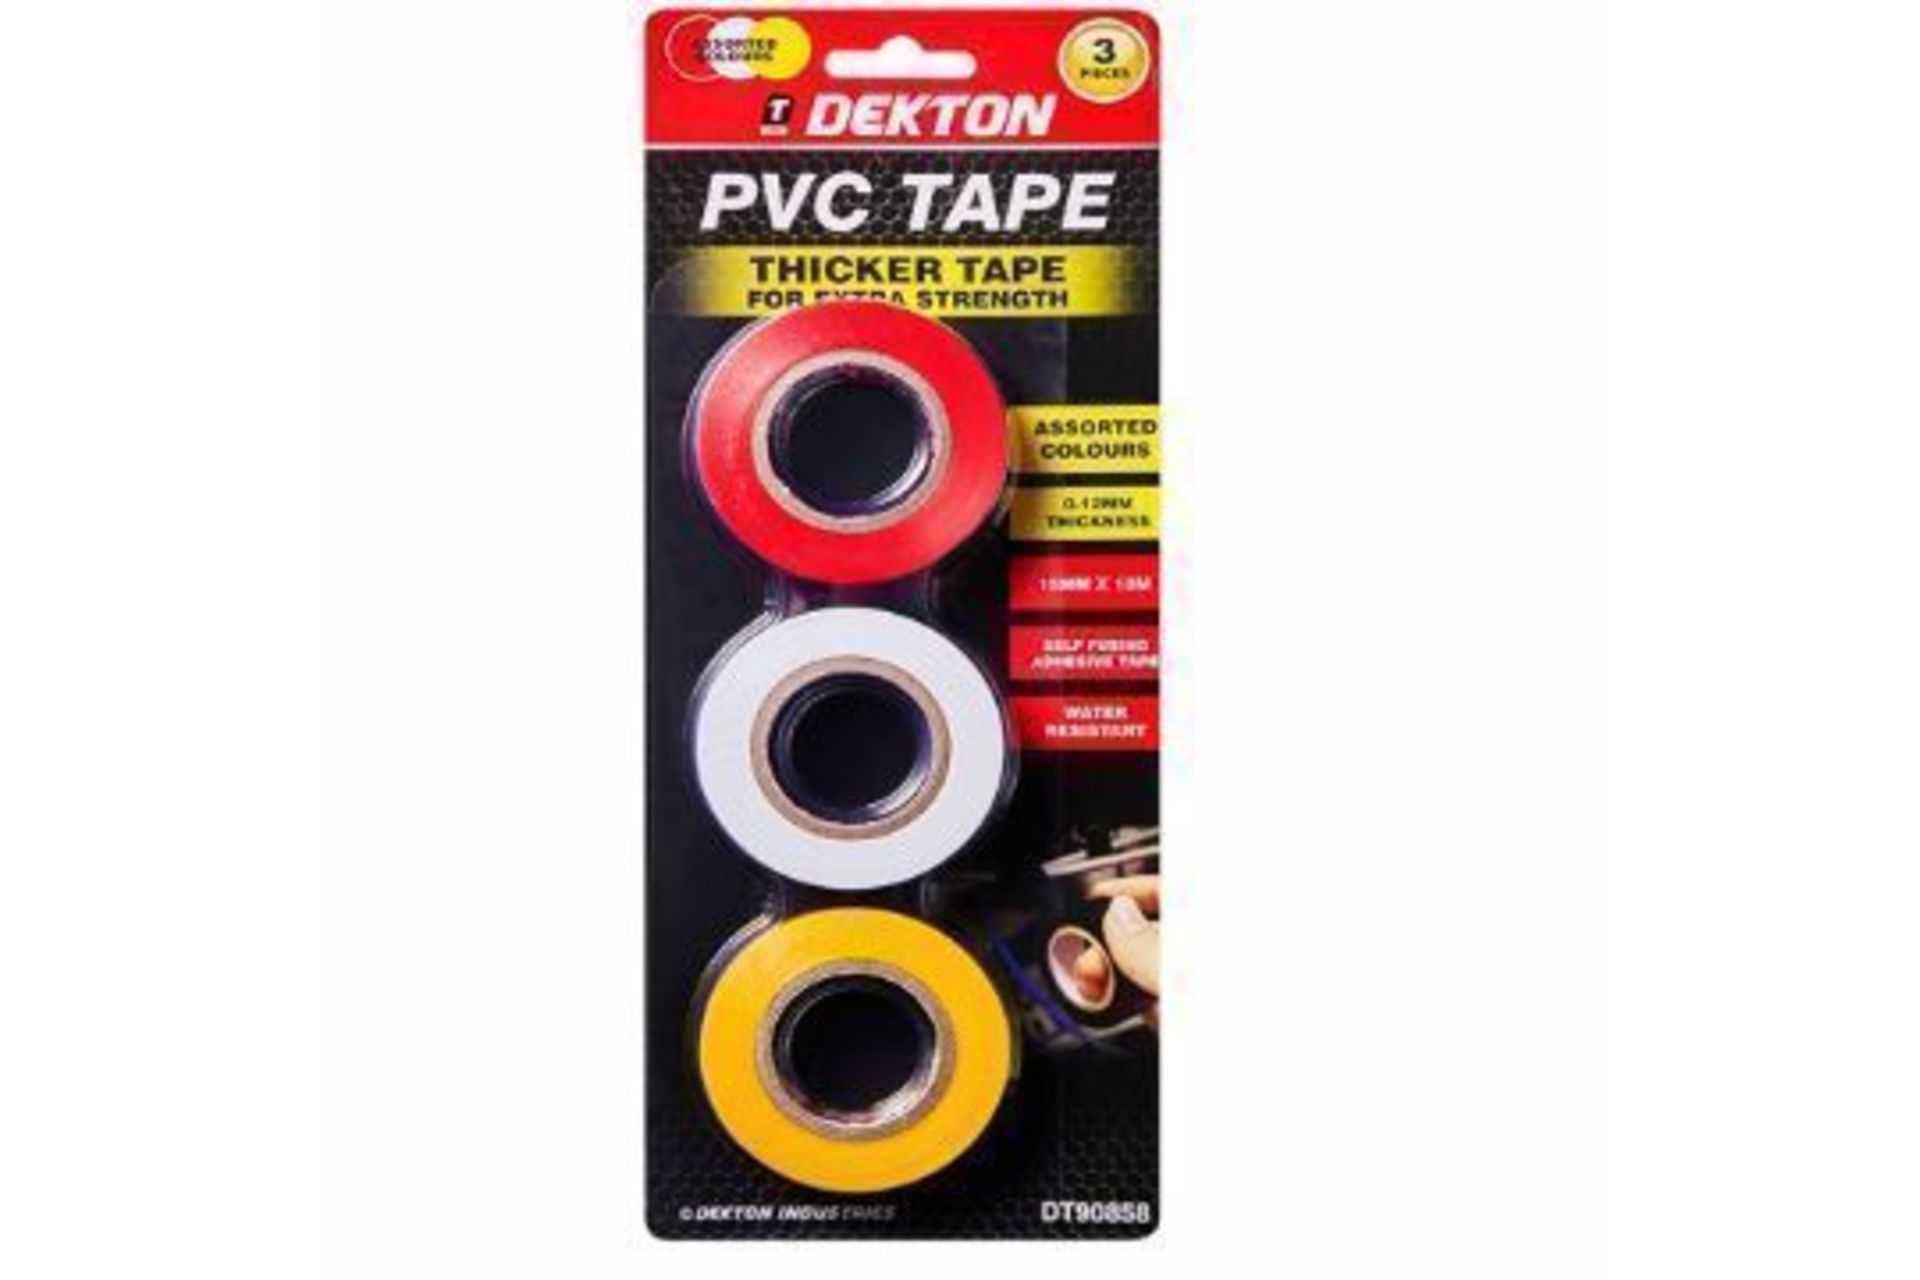 x2 Pack of 3 Dekton Coloured Insulation Tape (6 rolls)